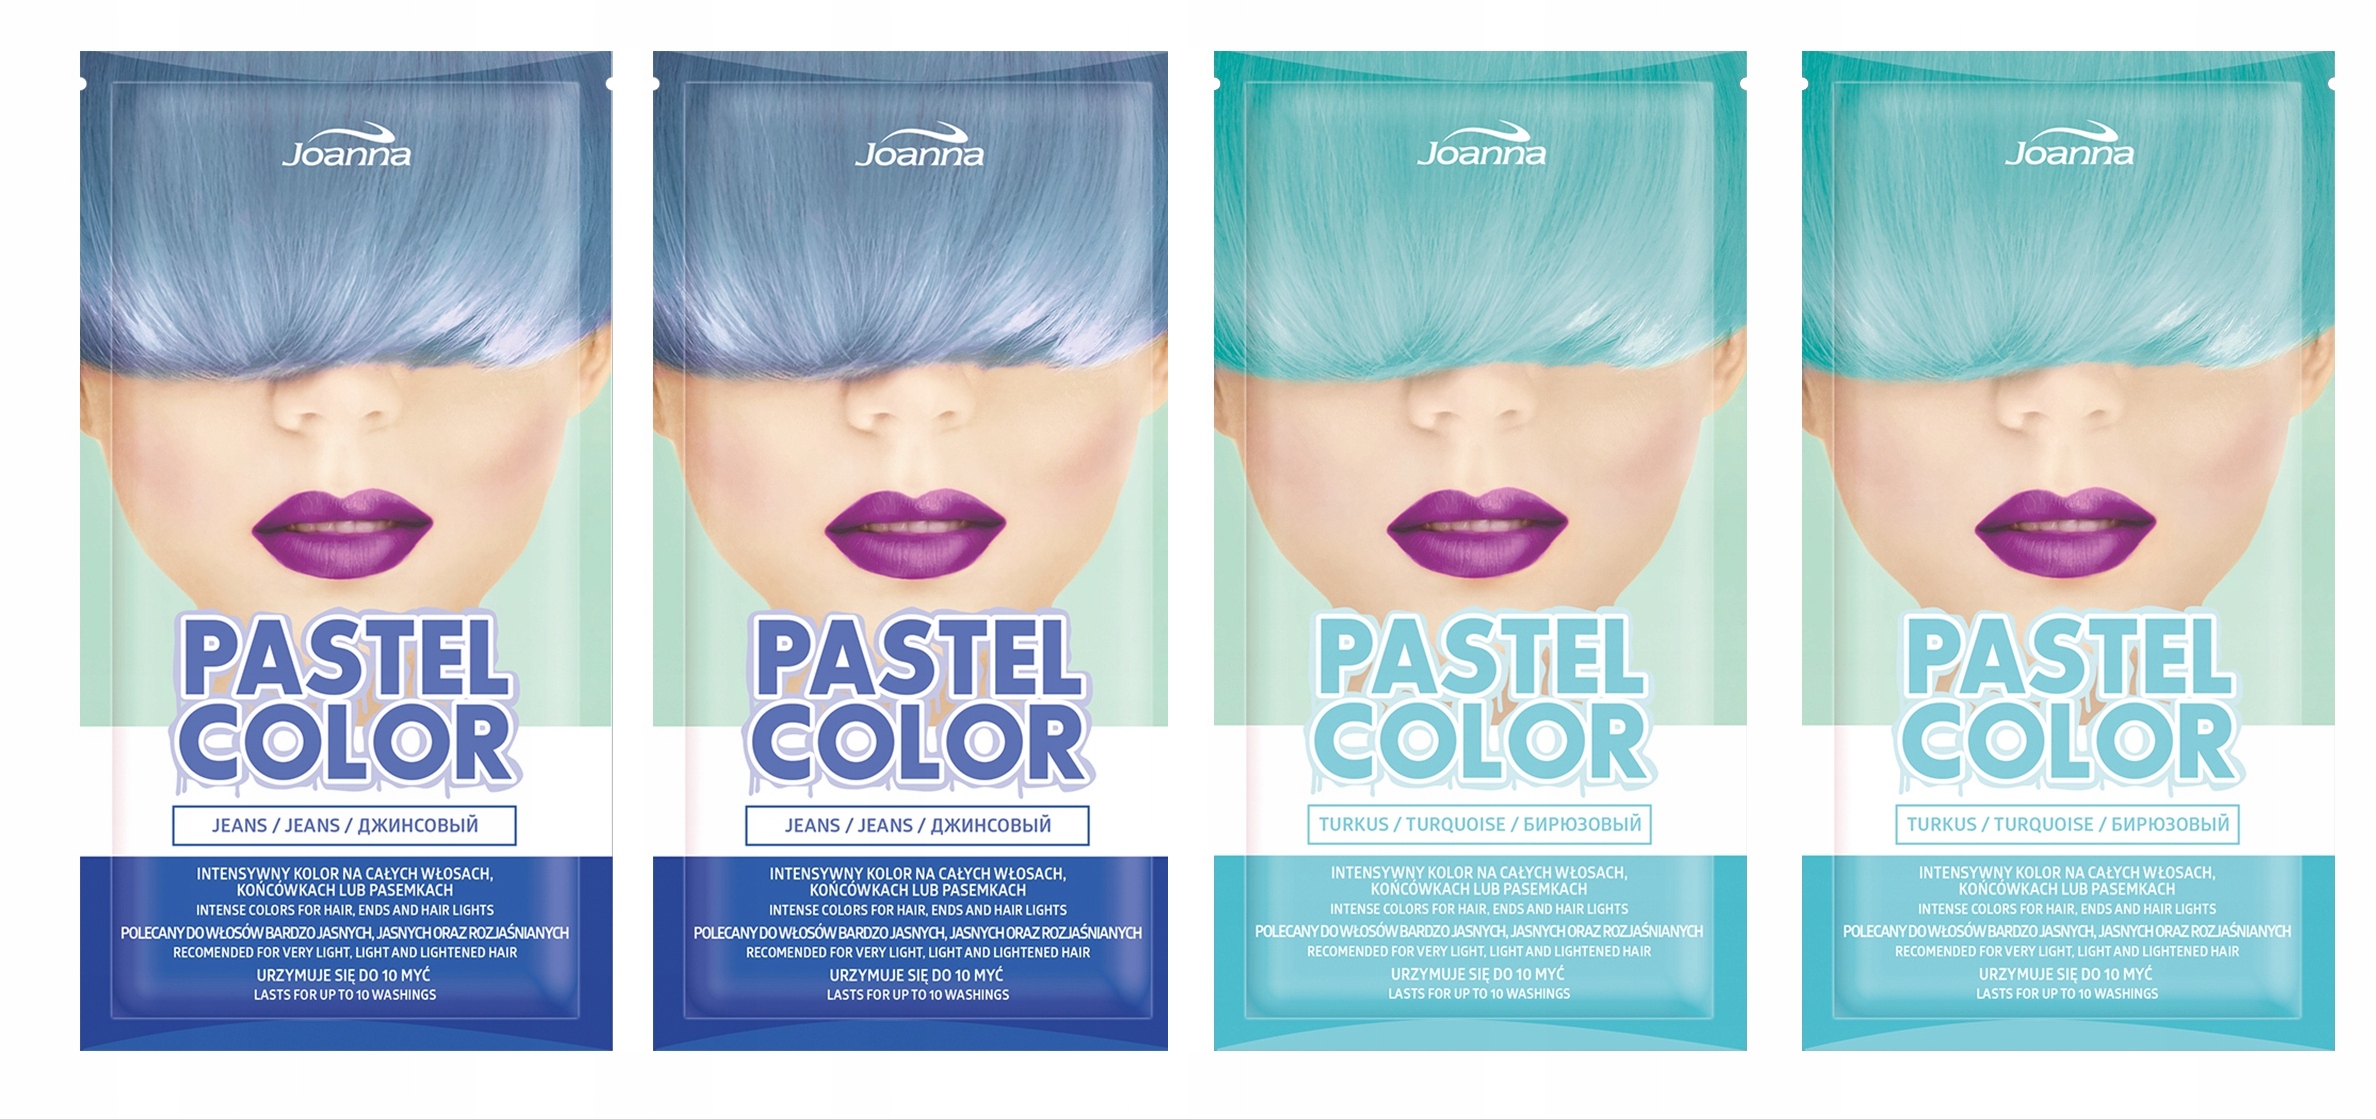 joanna szampon koloryzujący pastel color turkus 35g